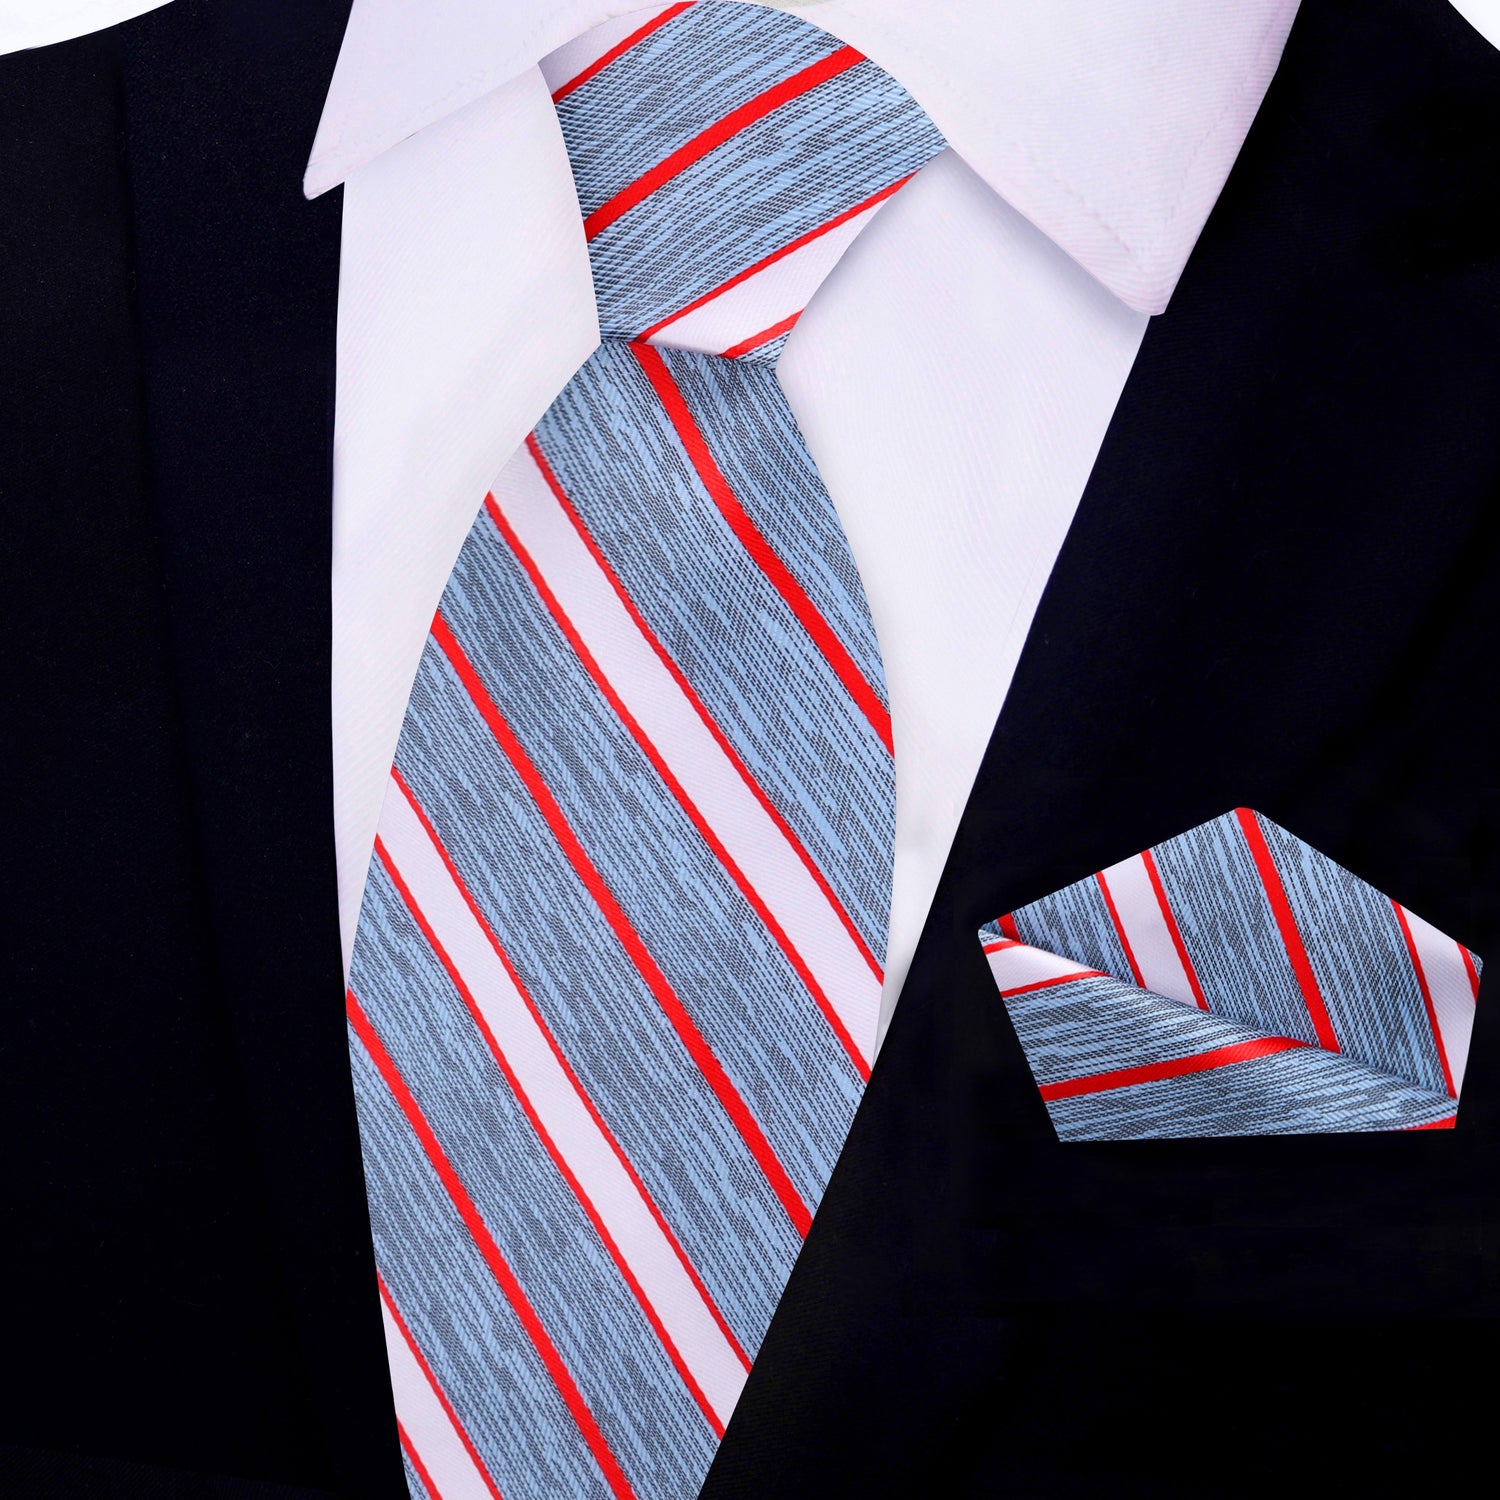 Deion PRIME TIME Sanders Blue, Red Stripe Tie and Pocket Square